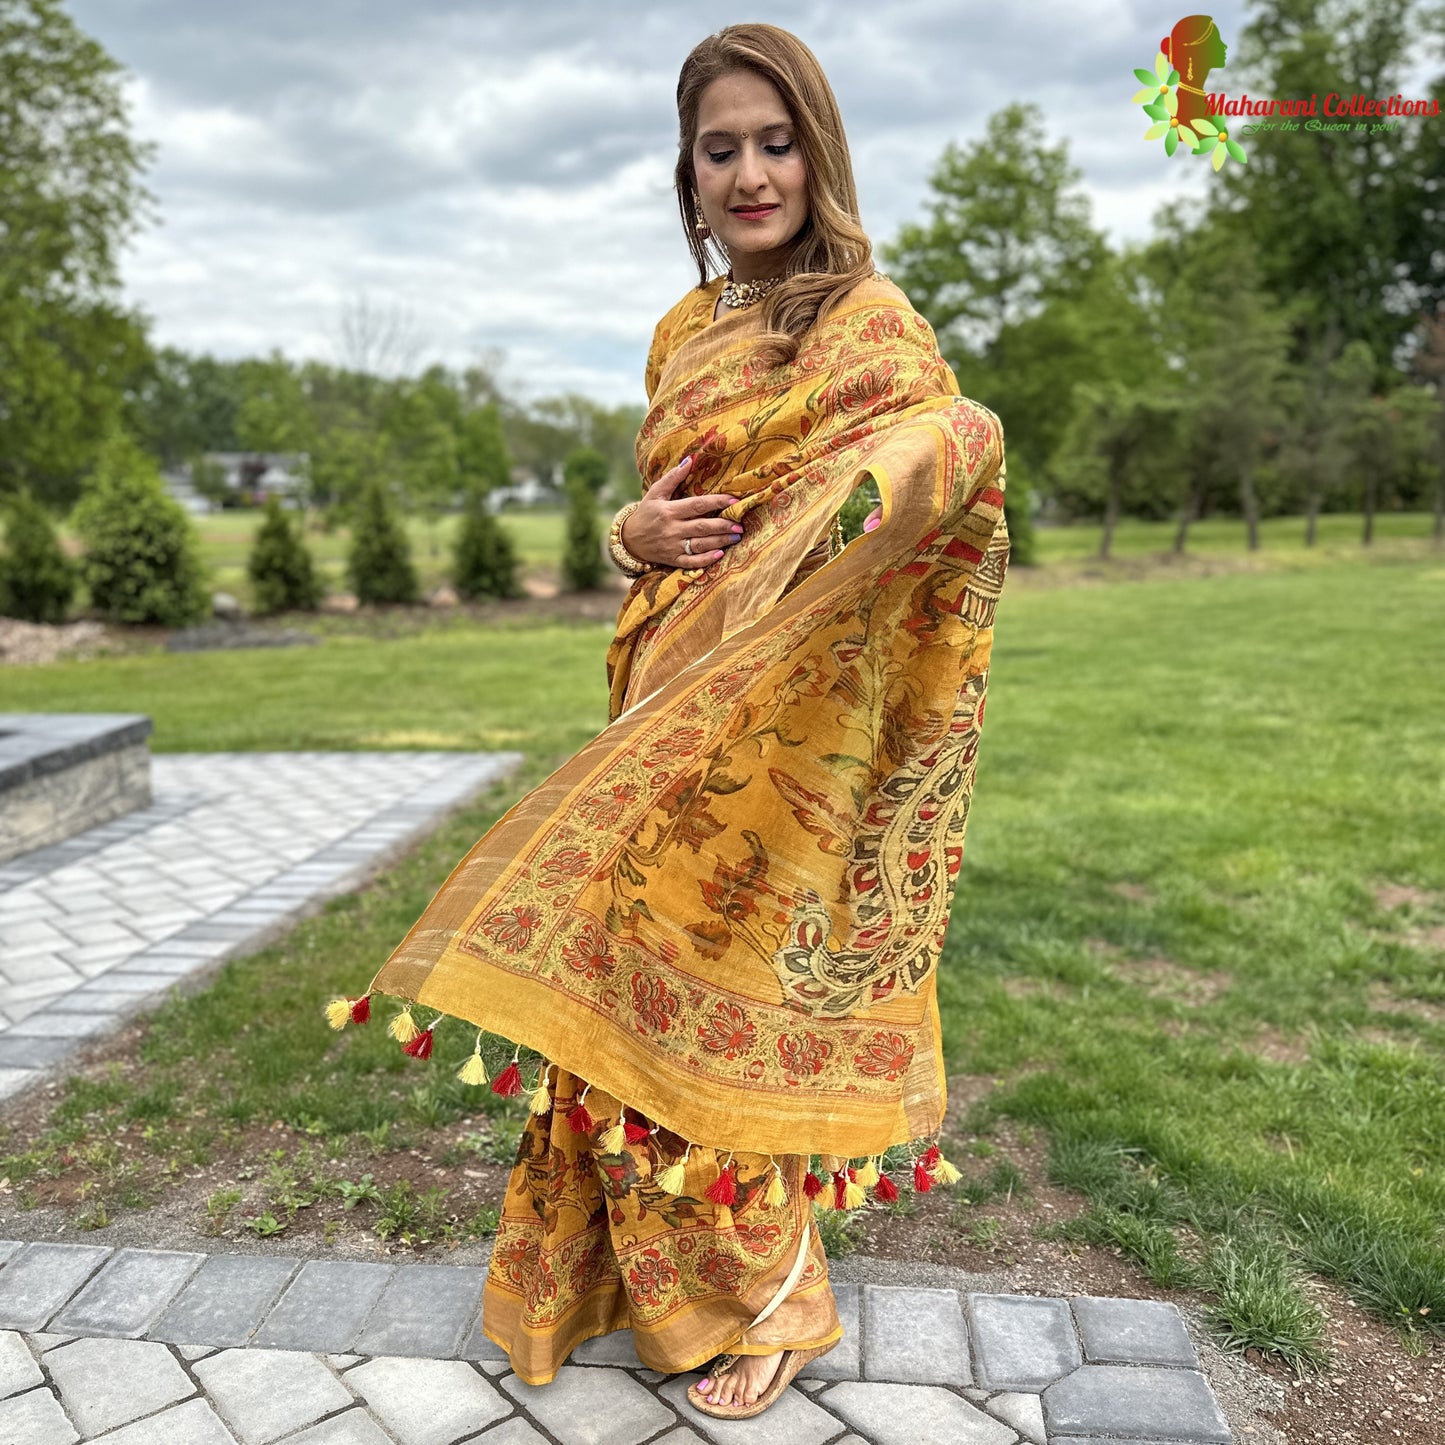 Maharani's Simple Elegance Matka Silk Saree - Mustard Yellow (with Stitched Blouse and Petticoat)